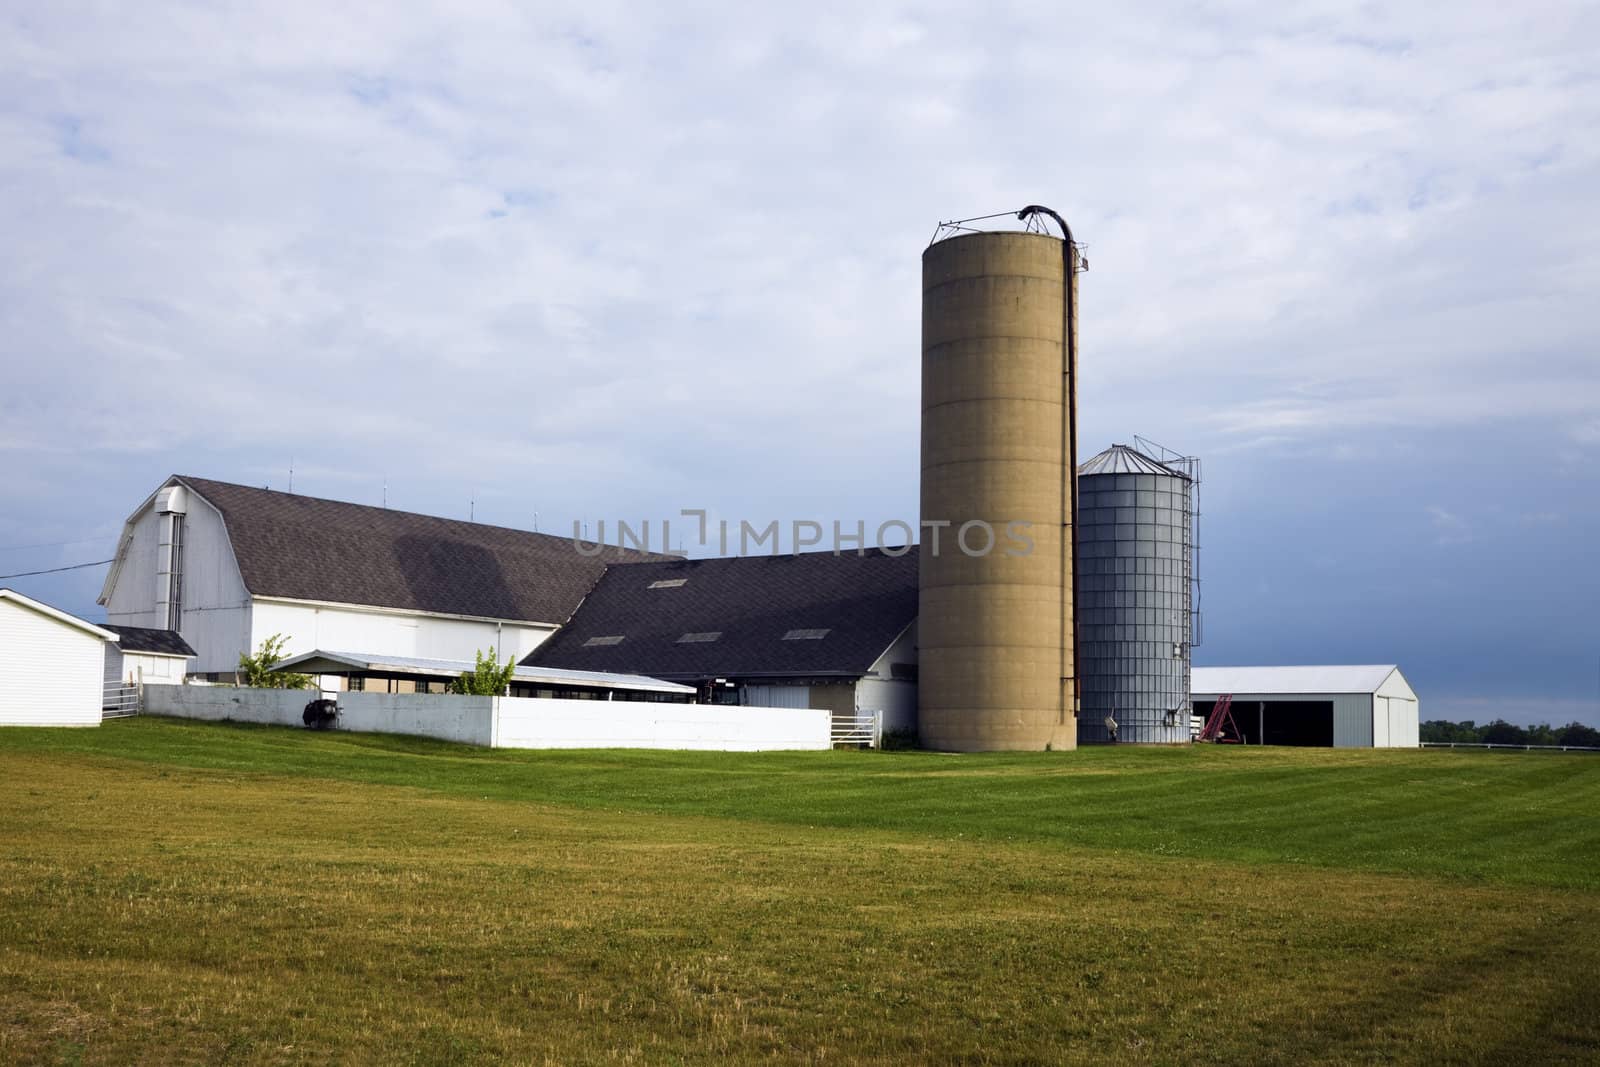 Farm in Illinois by benkrut